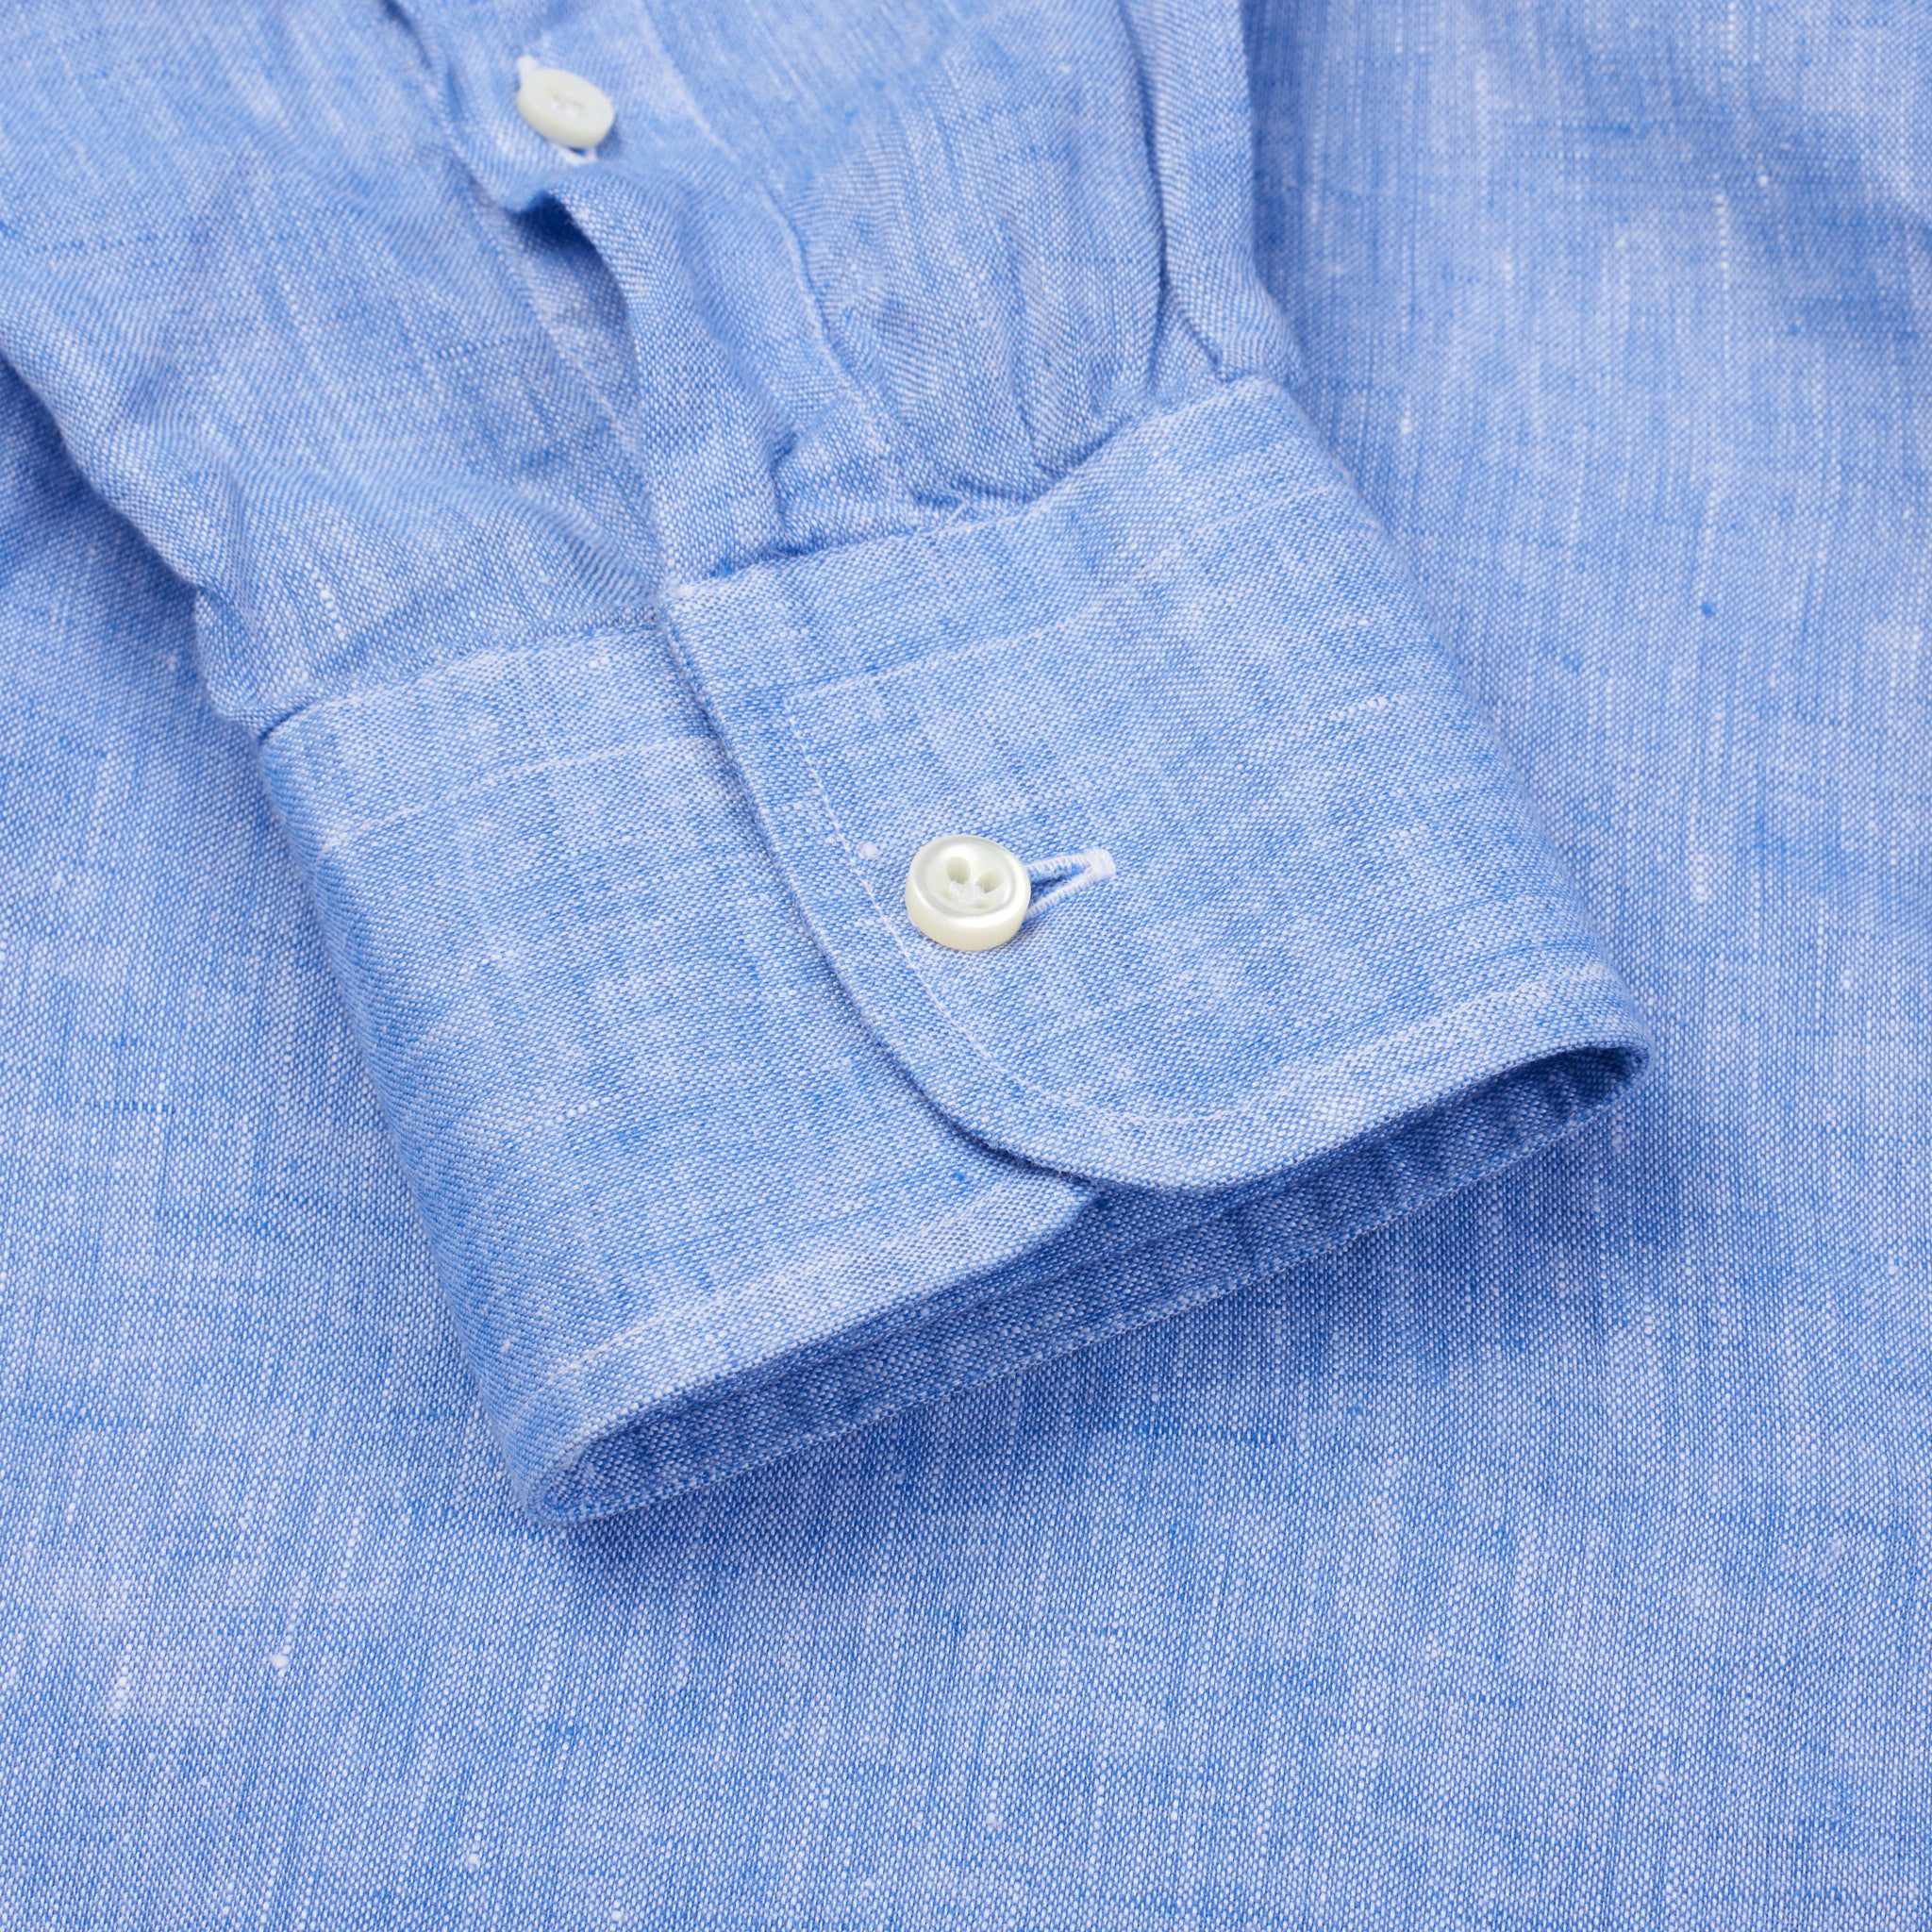 M.BARDELLI Milano Chambray Blue Linen 1 Pocket Casual Shirt NEW Size M M.BARDELLI